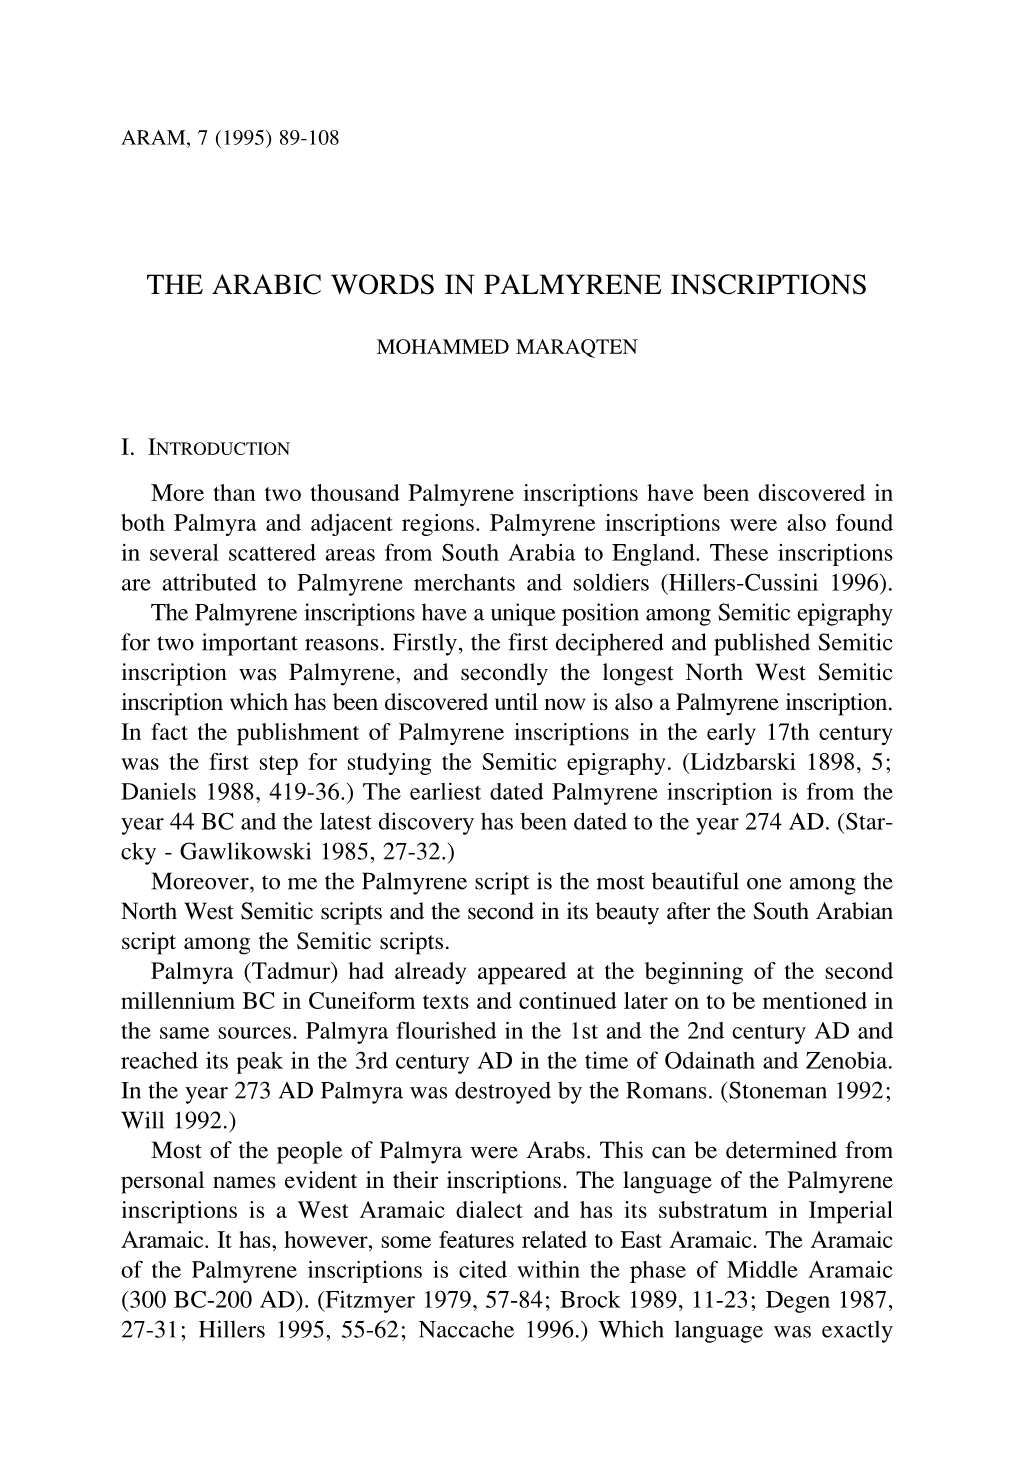 The Arabic Words in Palmyrene Inscriptions